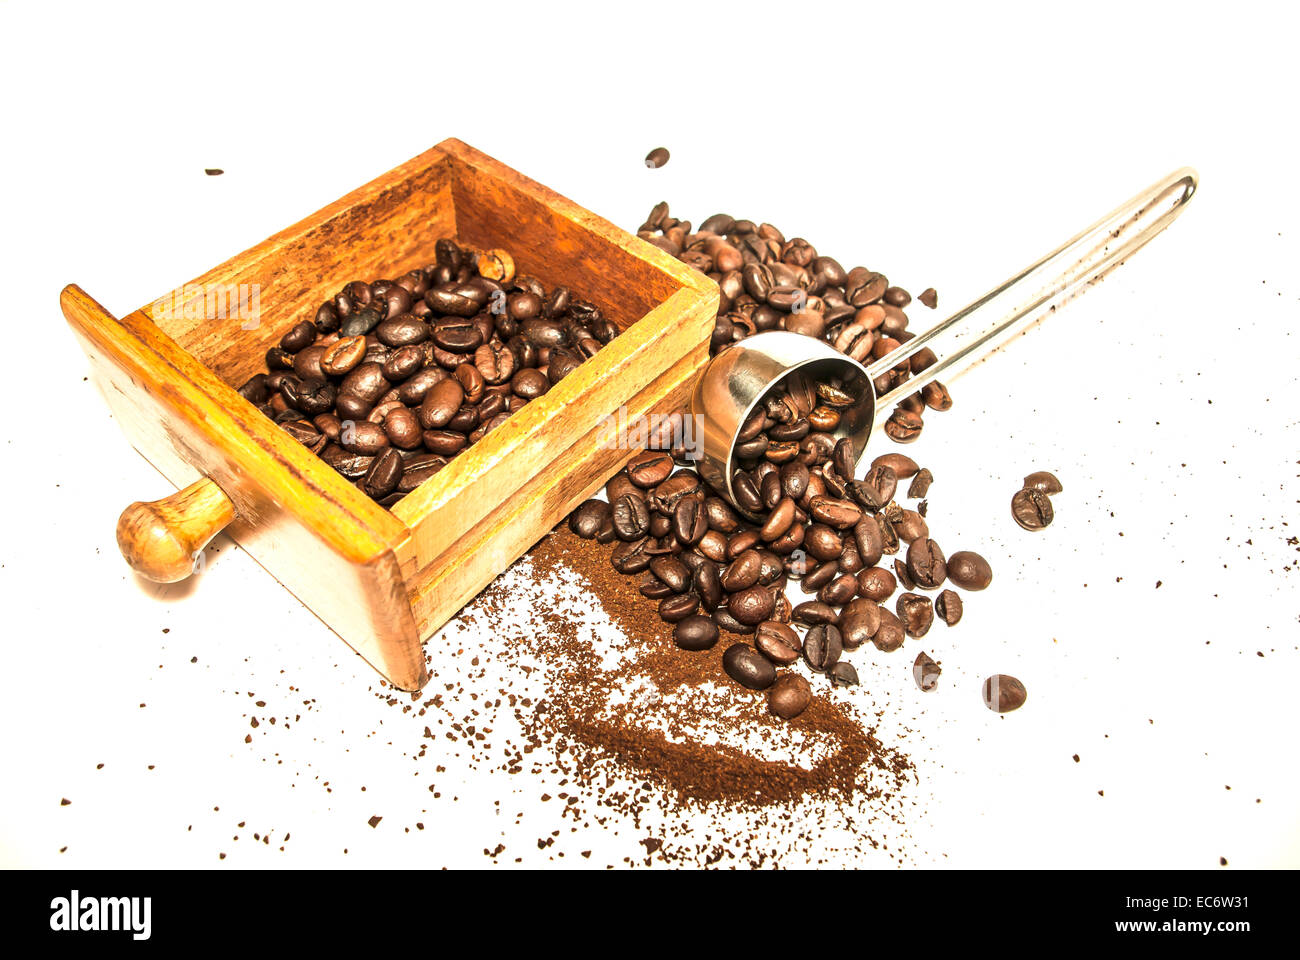 https://c8.alamy.com/comp/EC6W31/coffee-grinder-coffee-beans-grinding-2-EC6W31.jpg